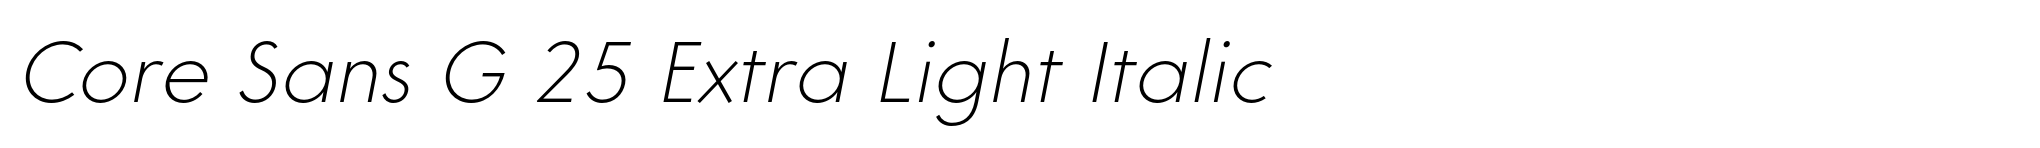 Core Sans G 25 Extra Light Italic image